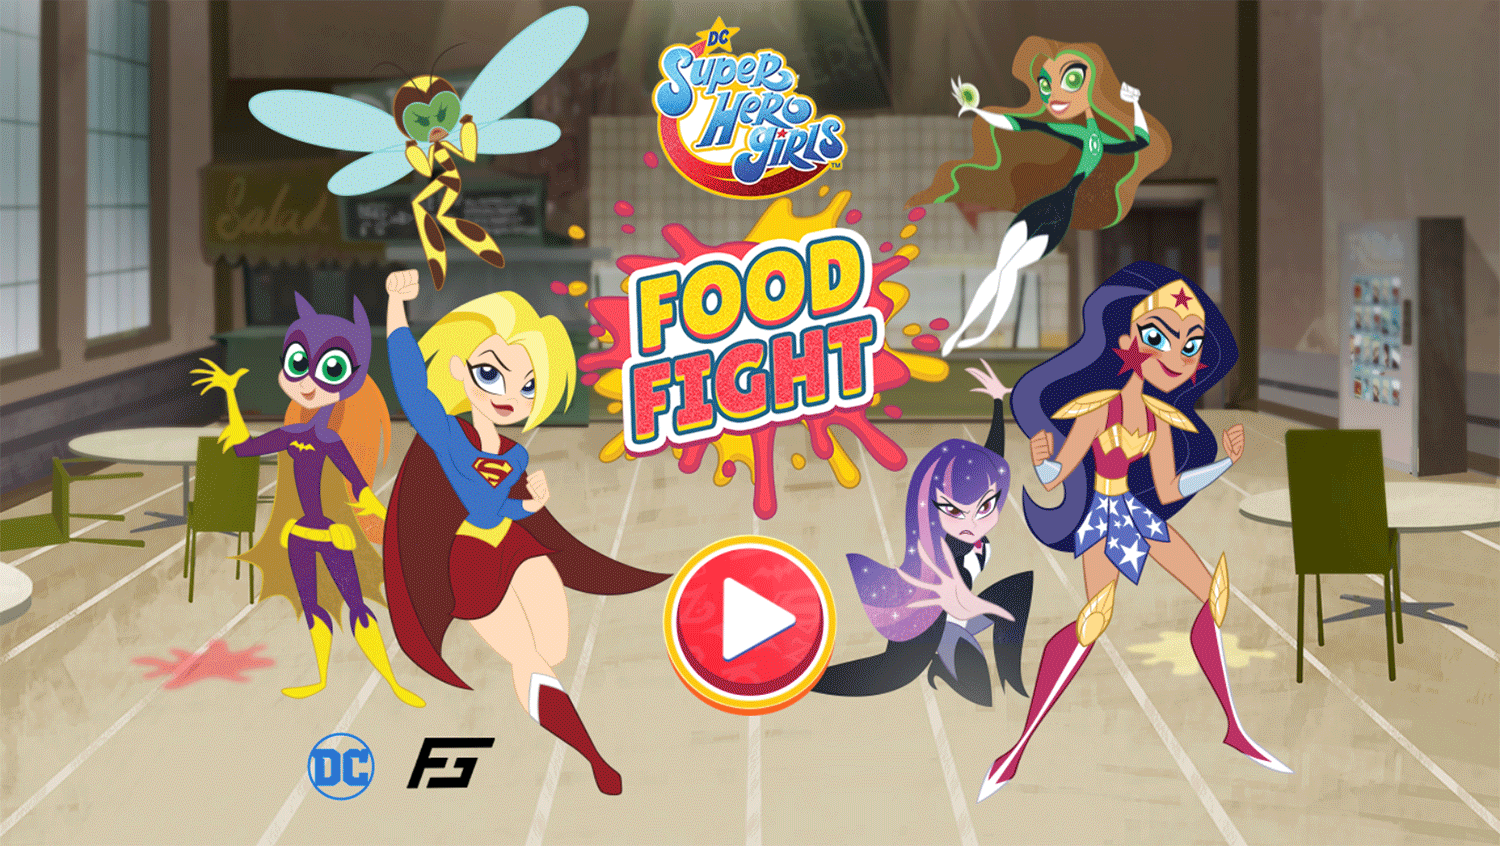 DC Super Hero Girls Food Fight Game Welcome Screen Screenshot.